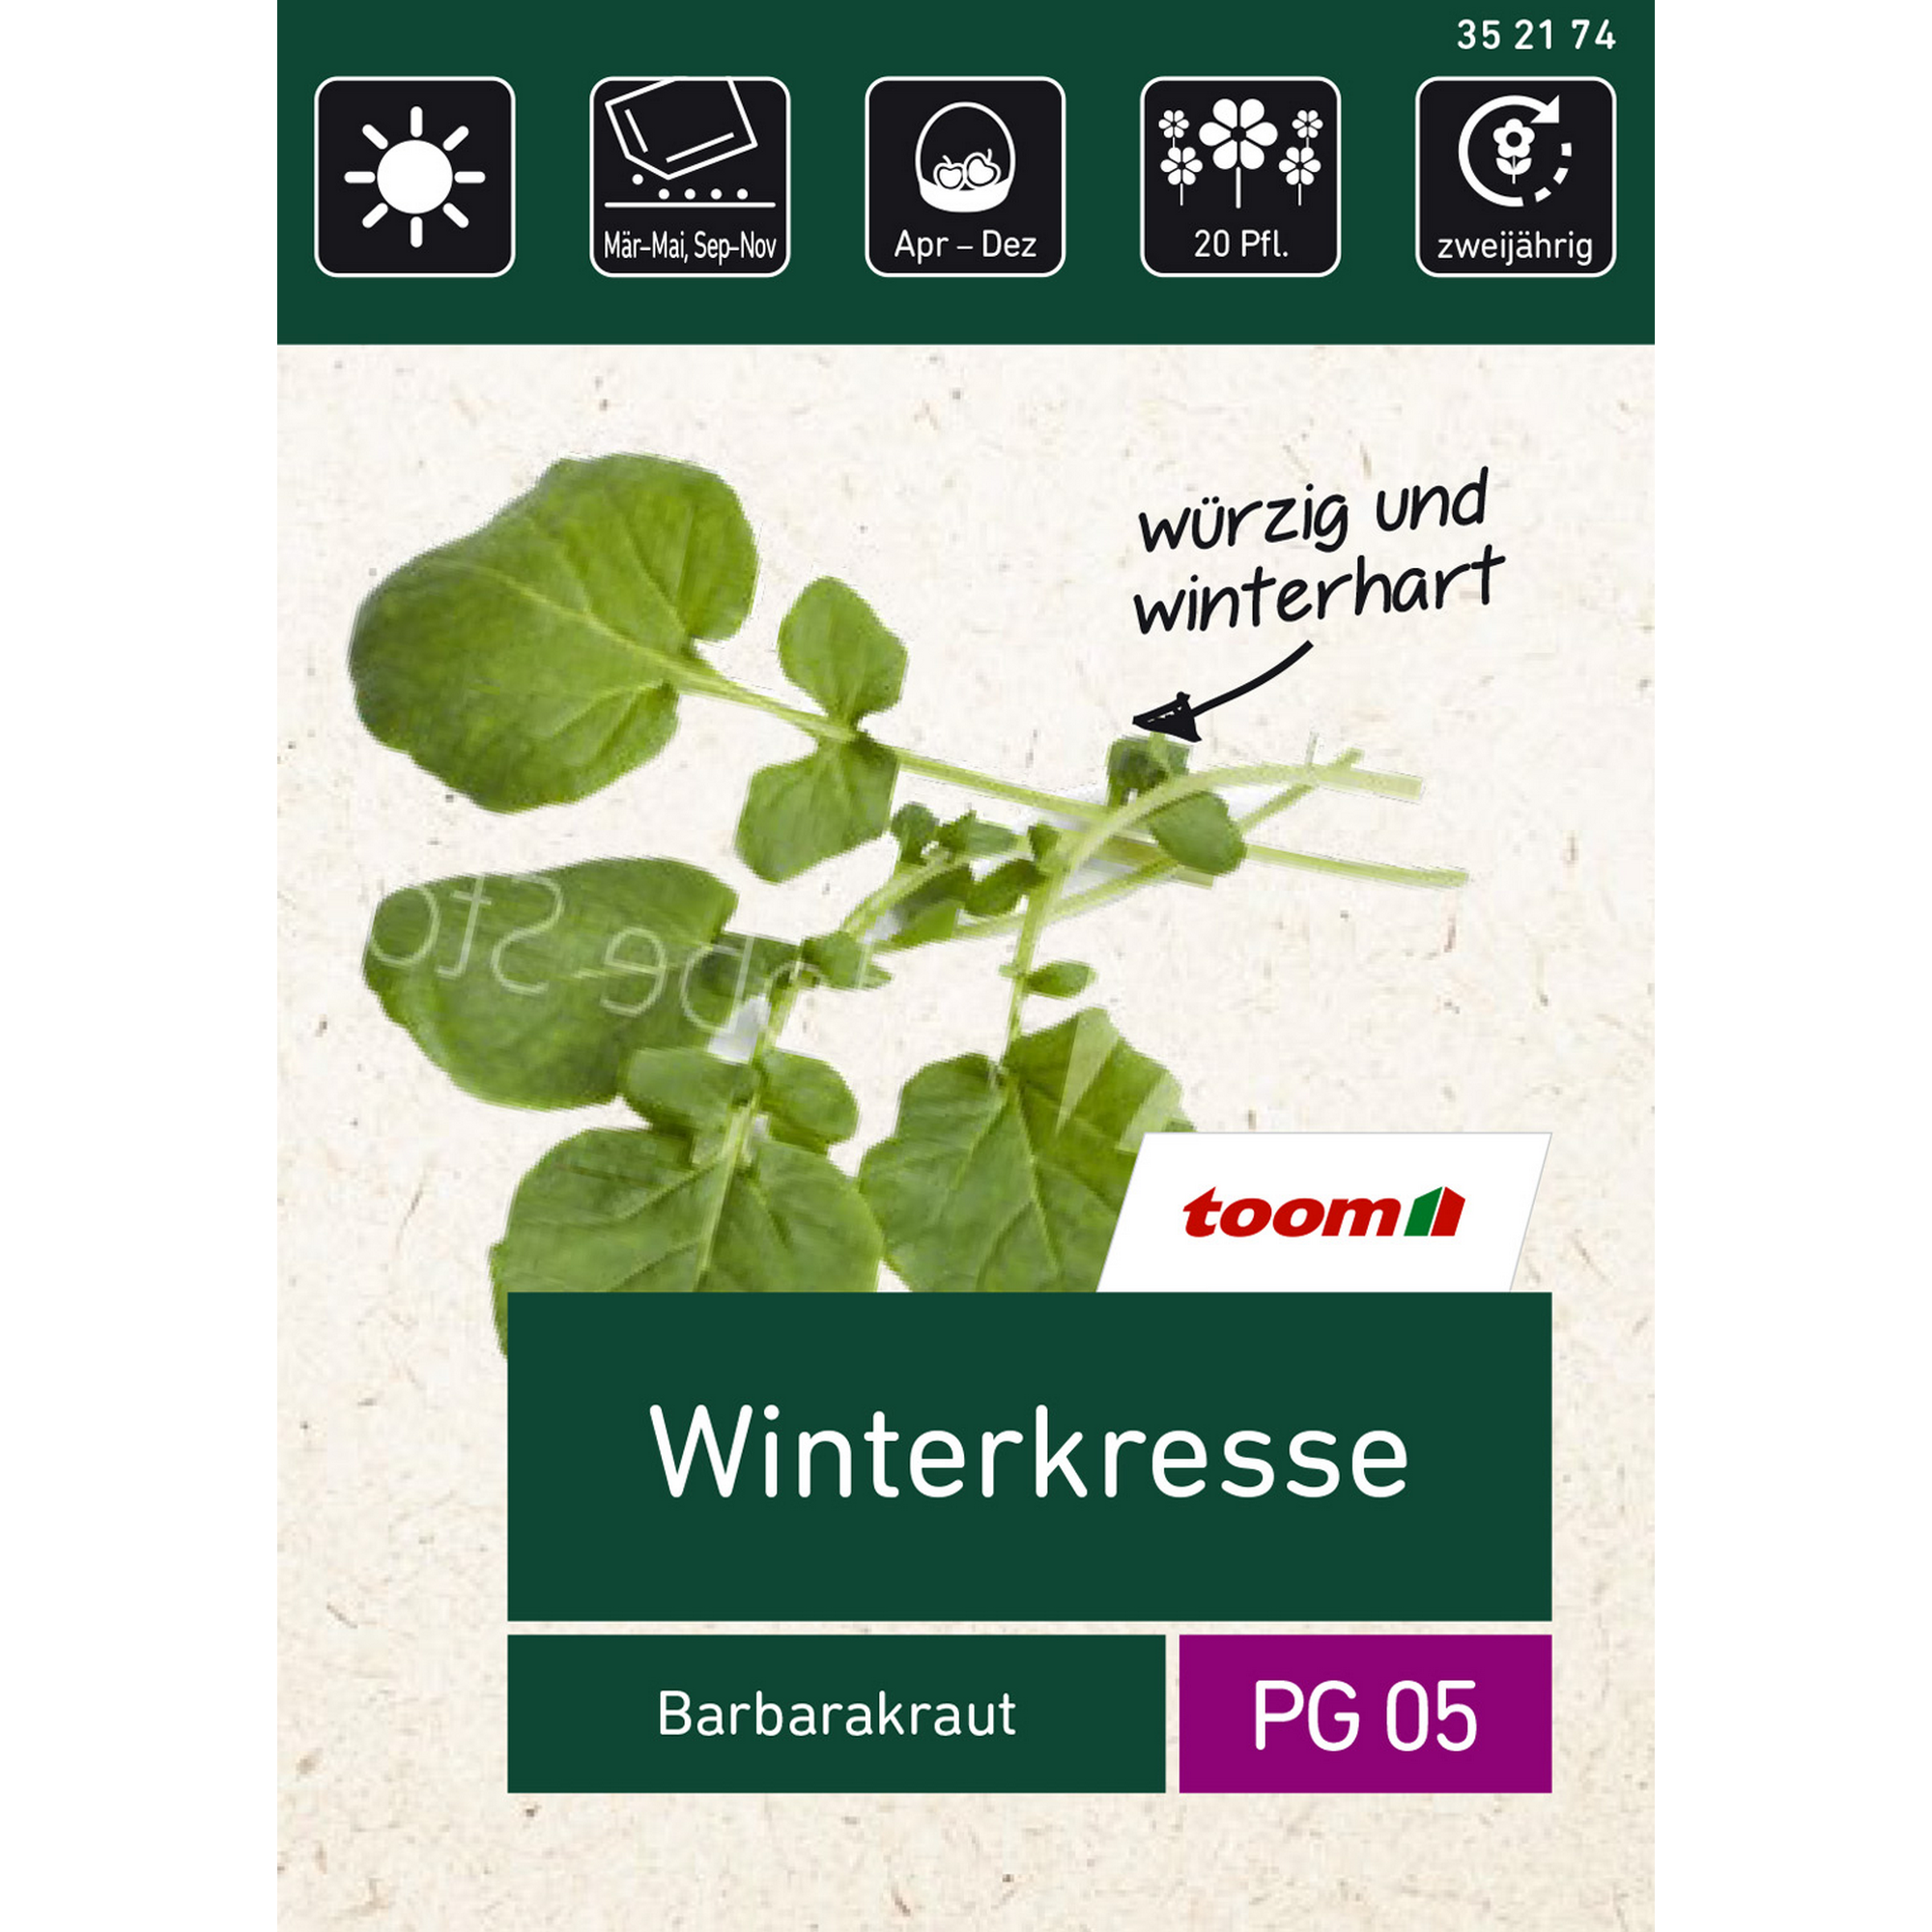 Winterkresse Barbarakraut + product picture